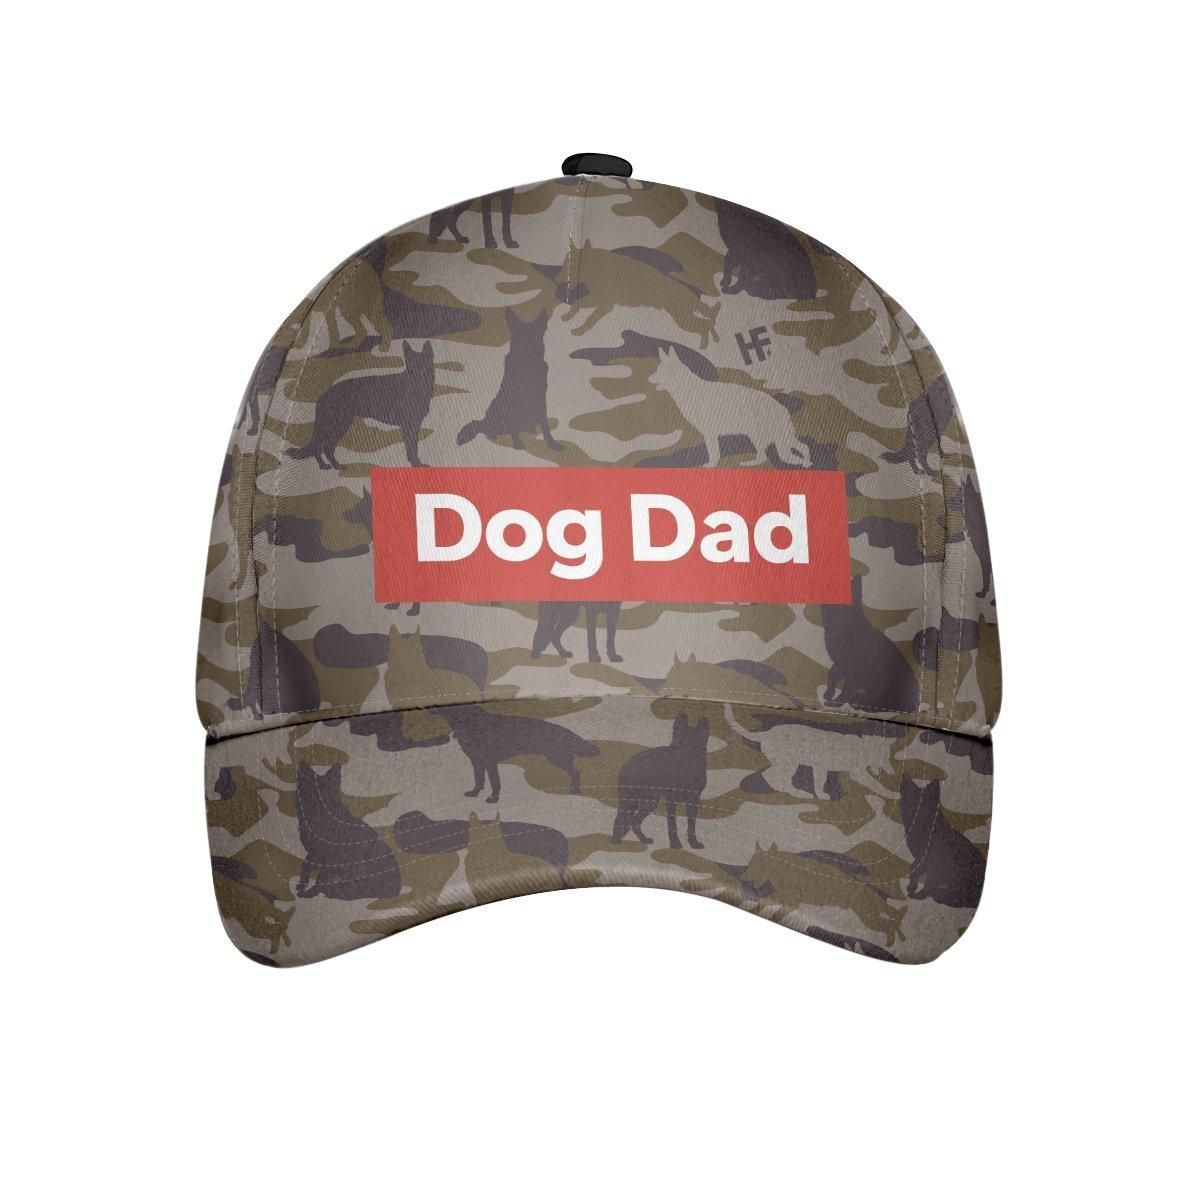 Dog Dad German Shepherd Camouflage Cap